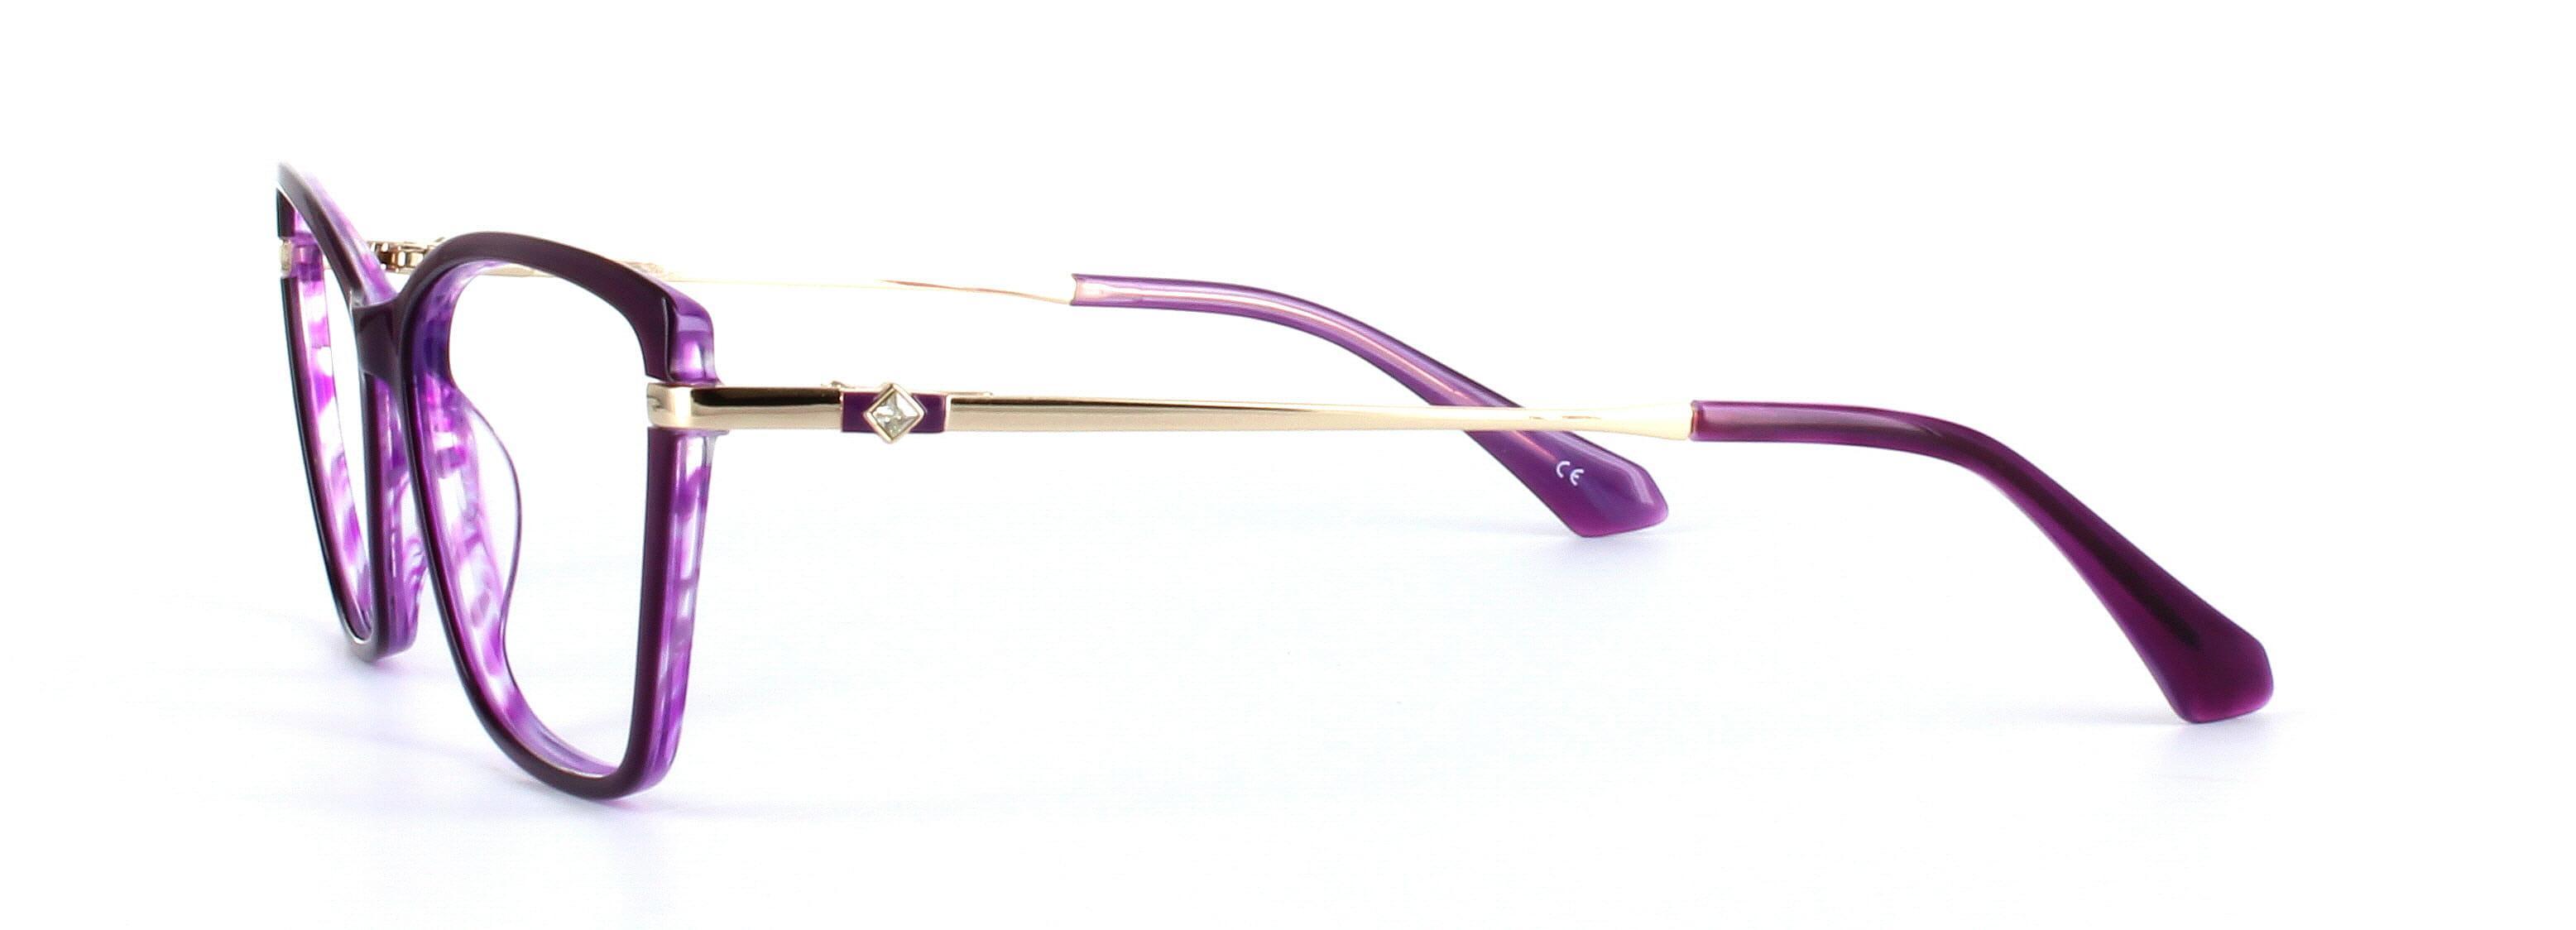 Jeanine Purple Full Rim Acetate Glasses - Image View 2